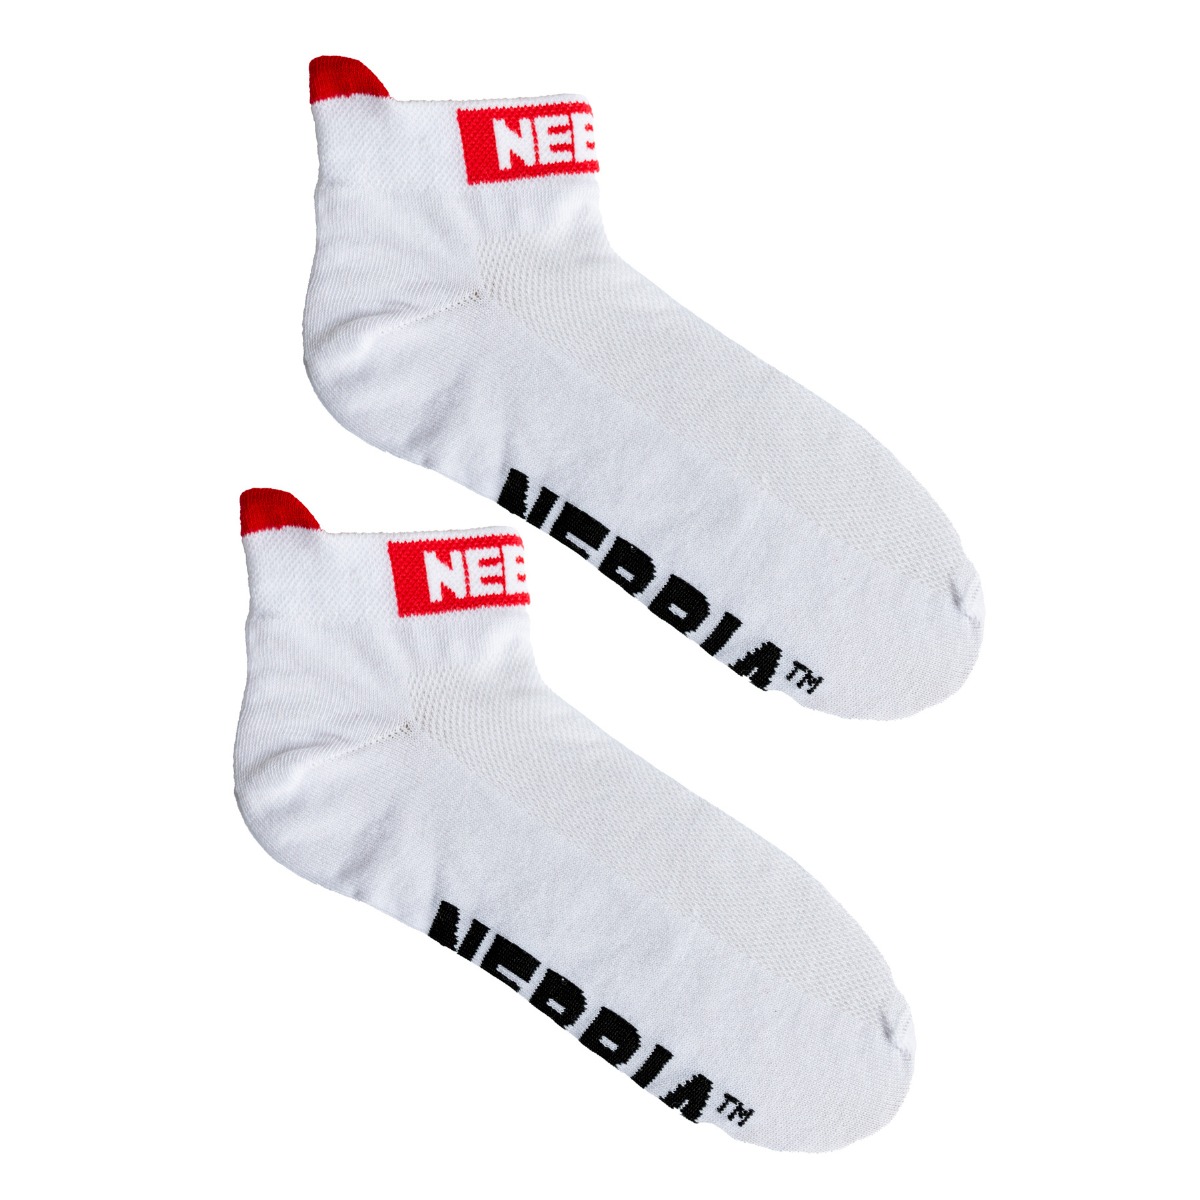 Ponožky Ankle Socks Smash It White 35 - 38 - NEBBIA NEBBIA